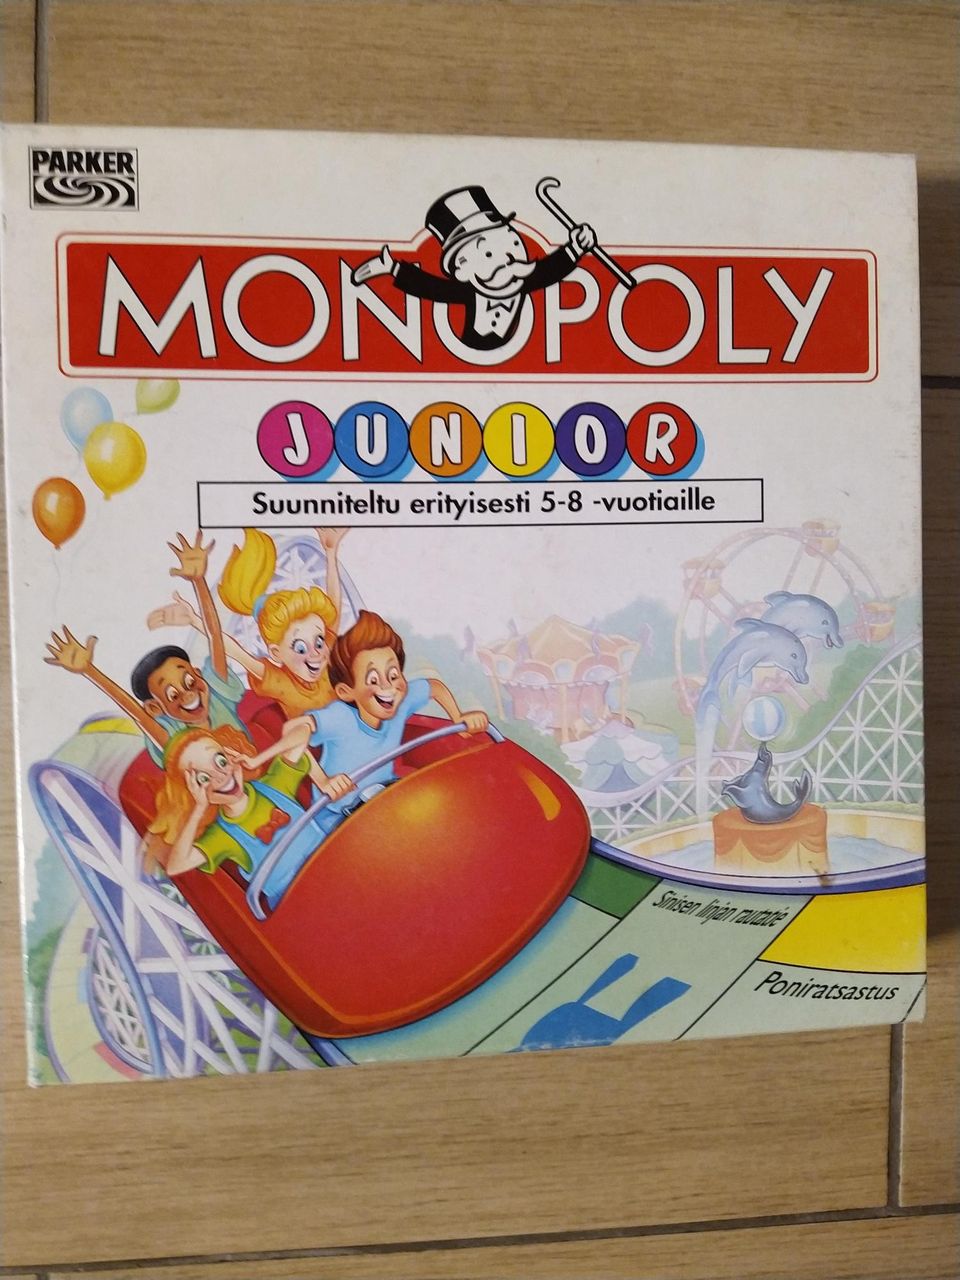 Junior monopoly